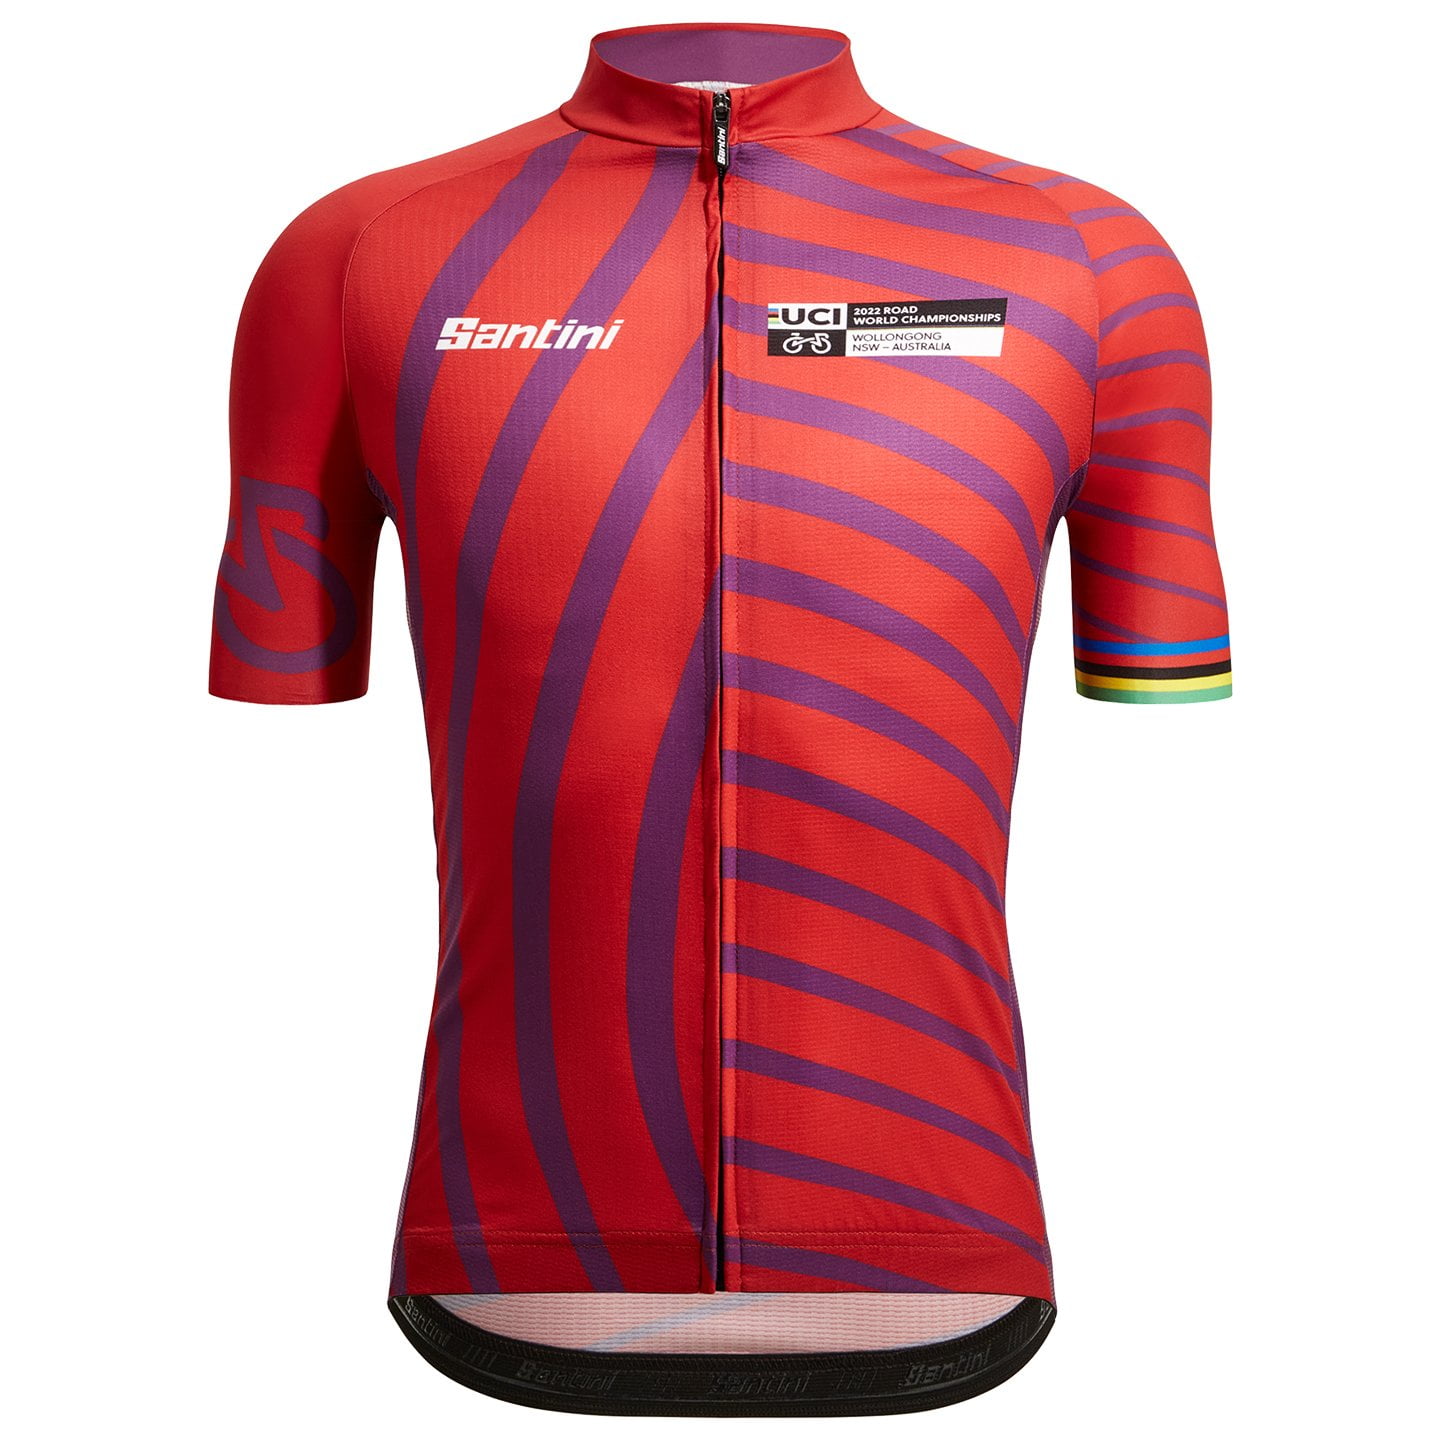 UCI WORLD CHAMPIONSHIP WOLLONGONG 2022 Short Sleeve Jersey, for men, size 2XL, Cycle shirt, Bike gear